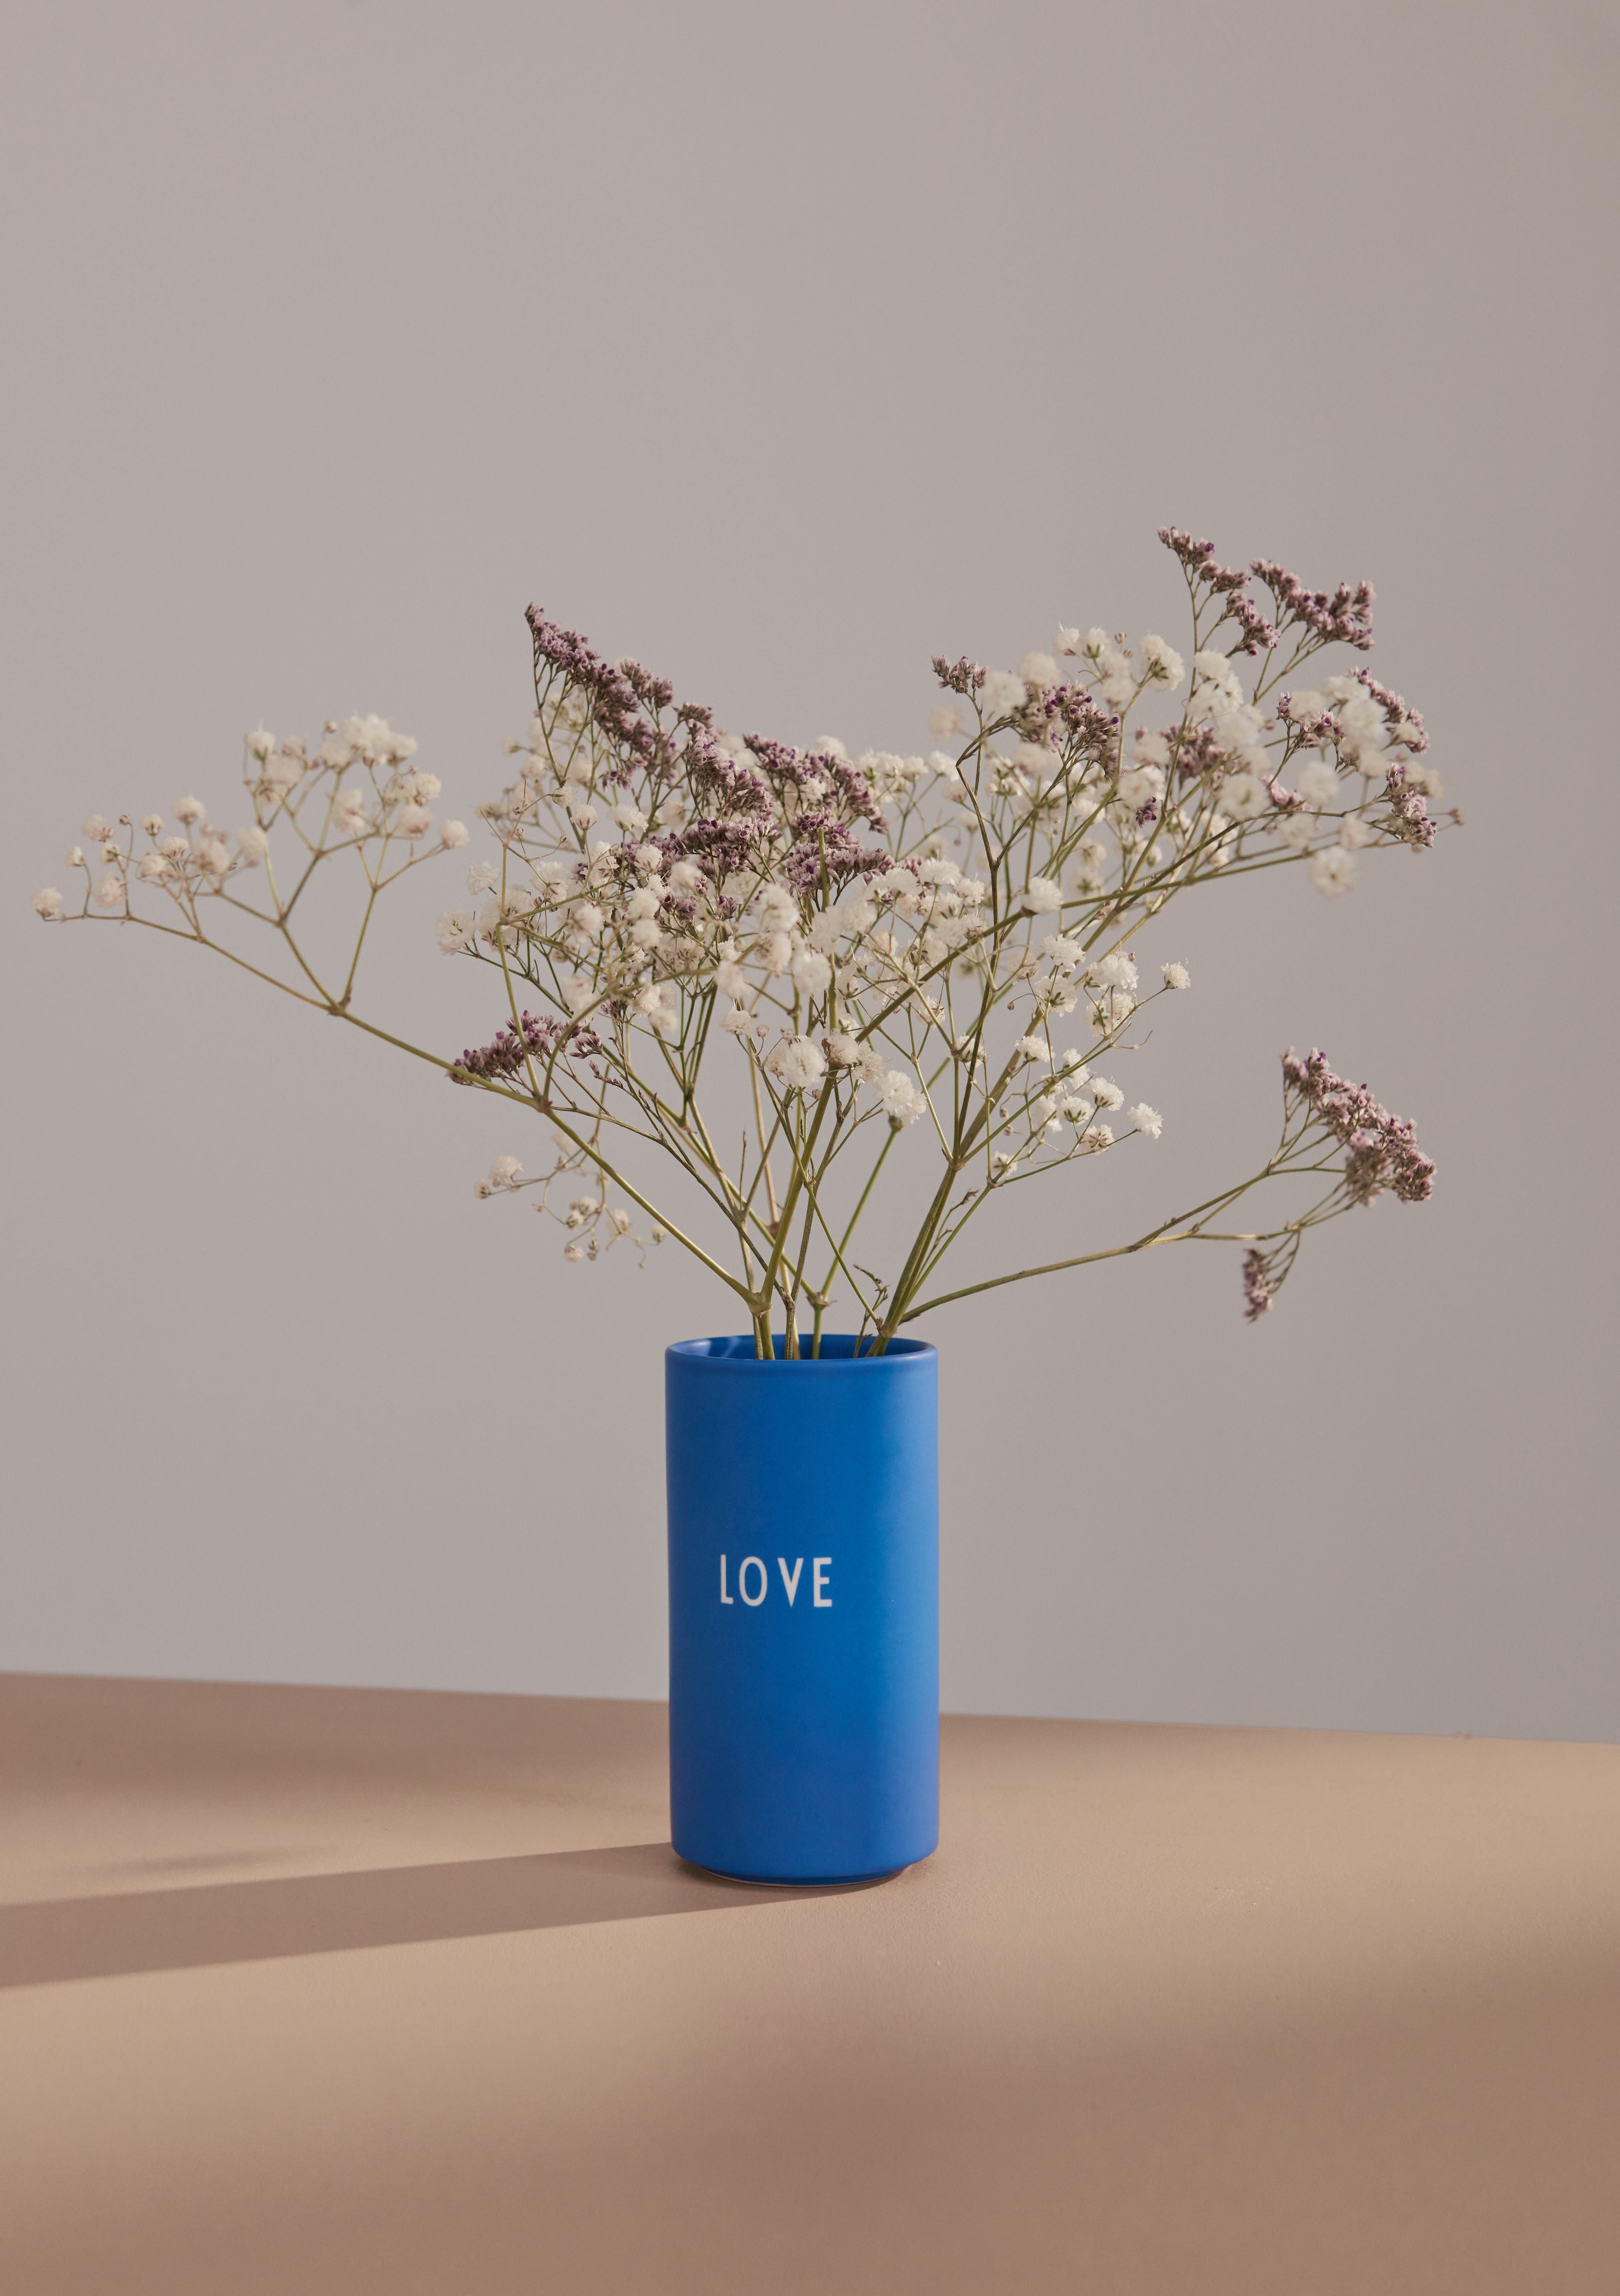 Designové písmena Oblíbená váza kobalt modrá, kobalt modrá